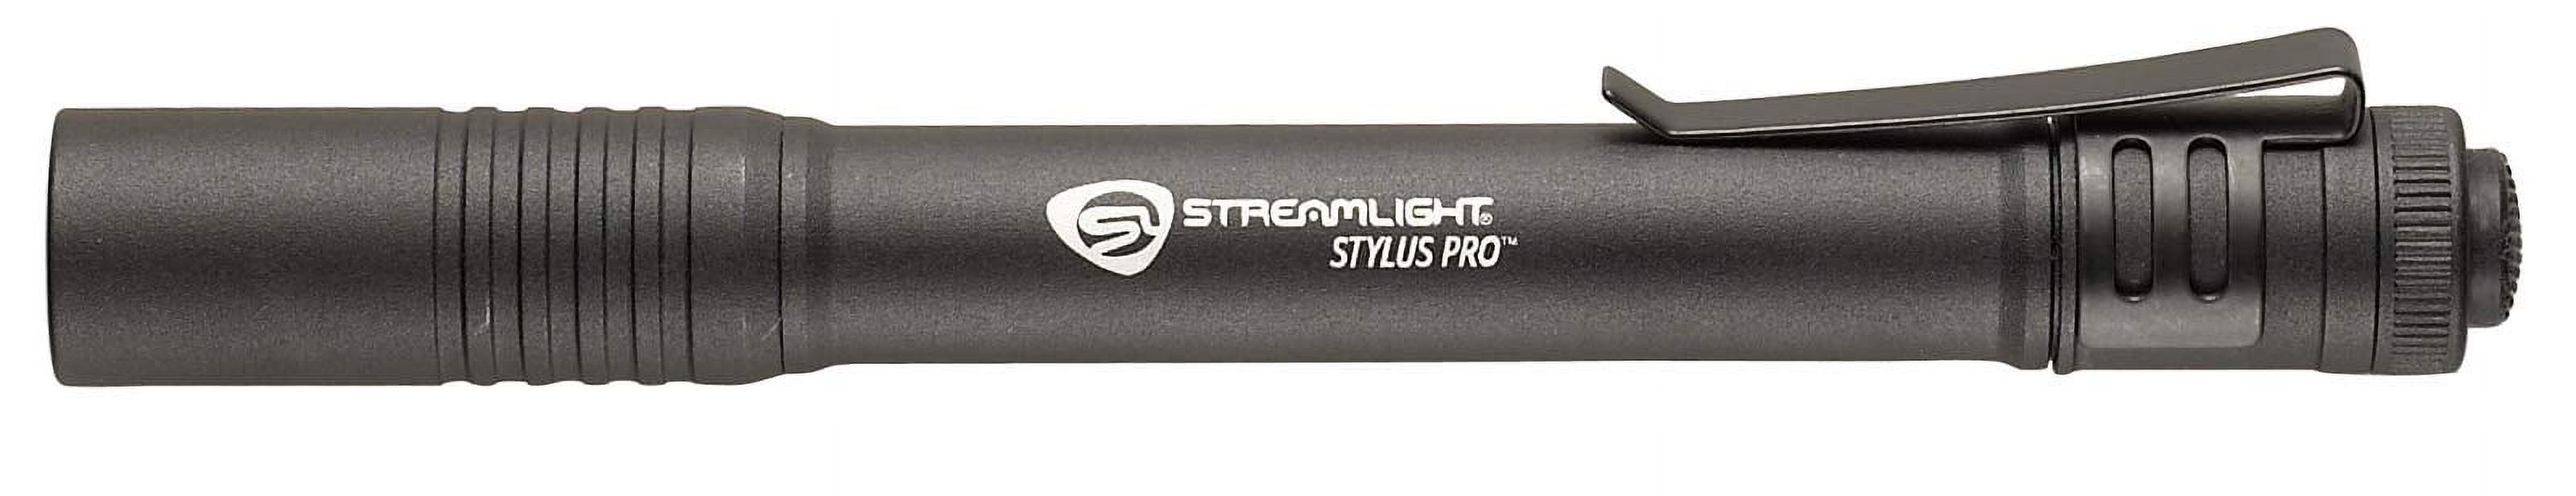 Streamlight Stylus Pro Penlight - image 3 of 7